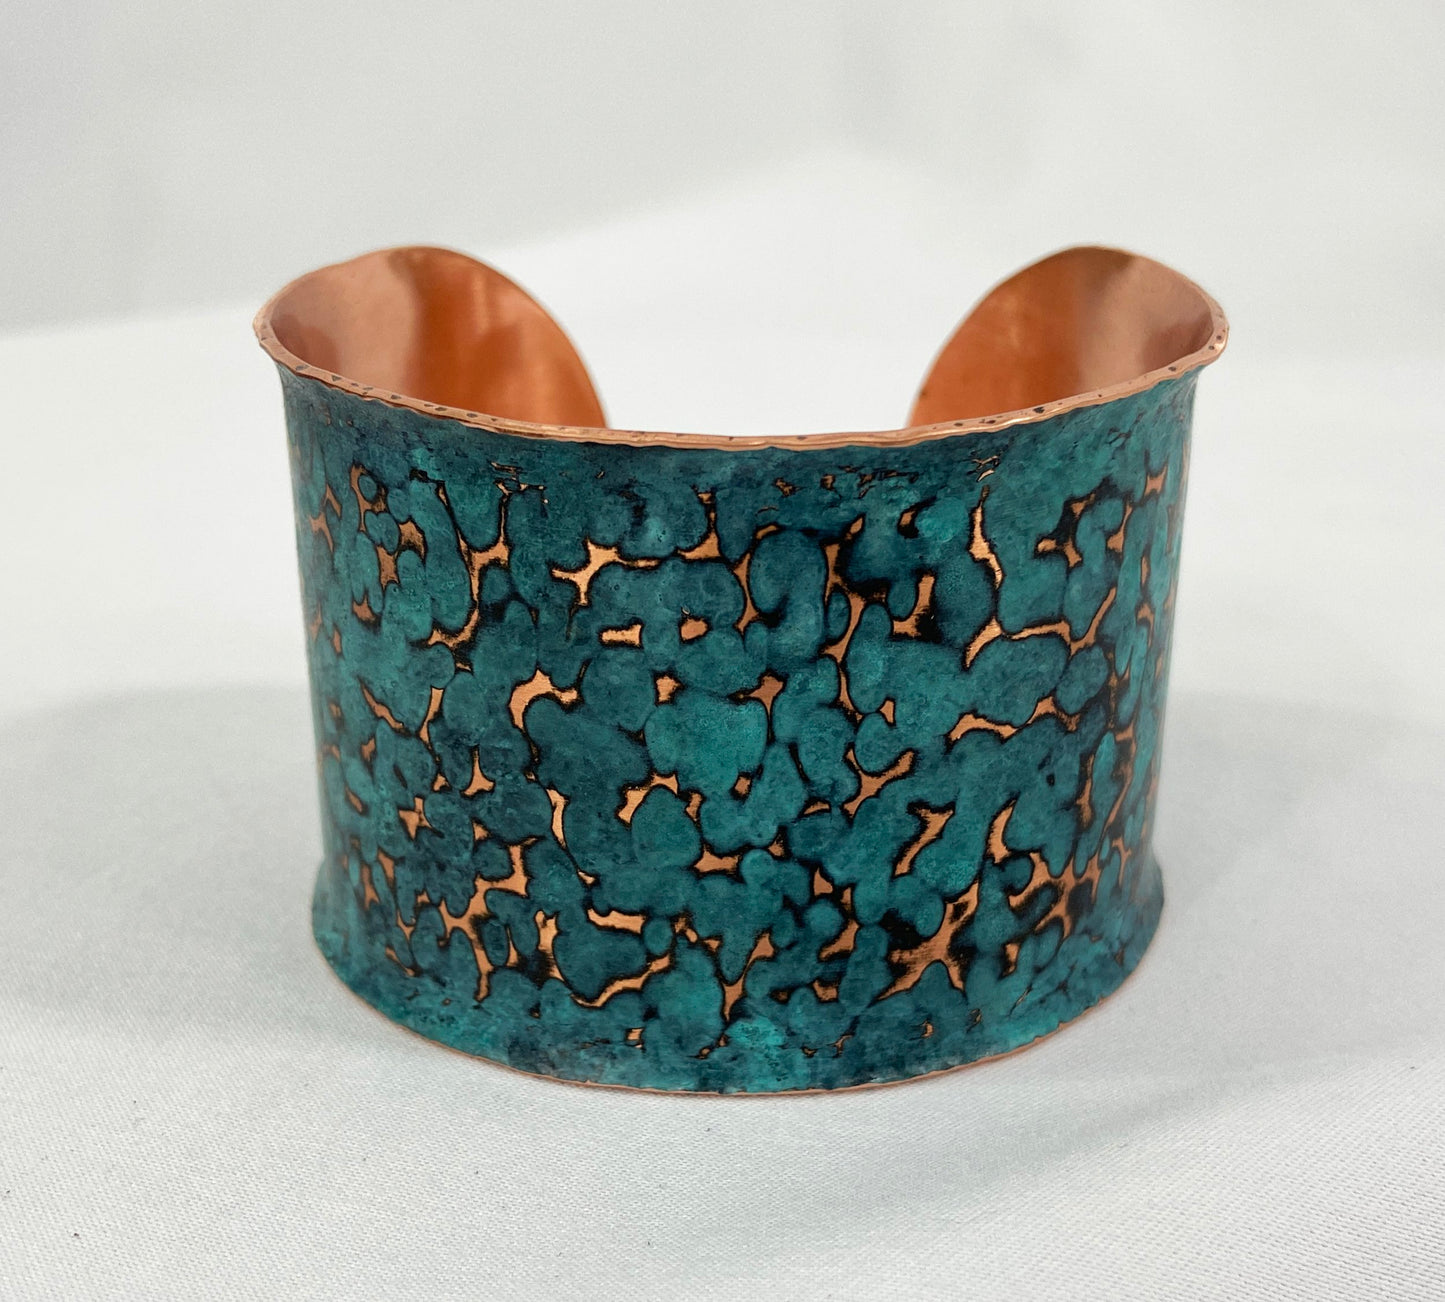 Hammered Copper Cuff Bracelet with Cupric Patina